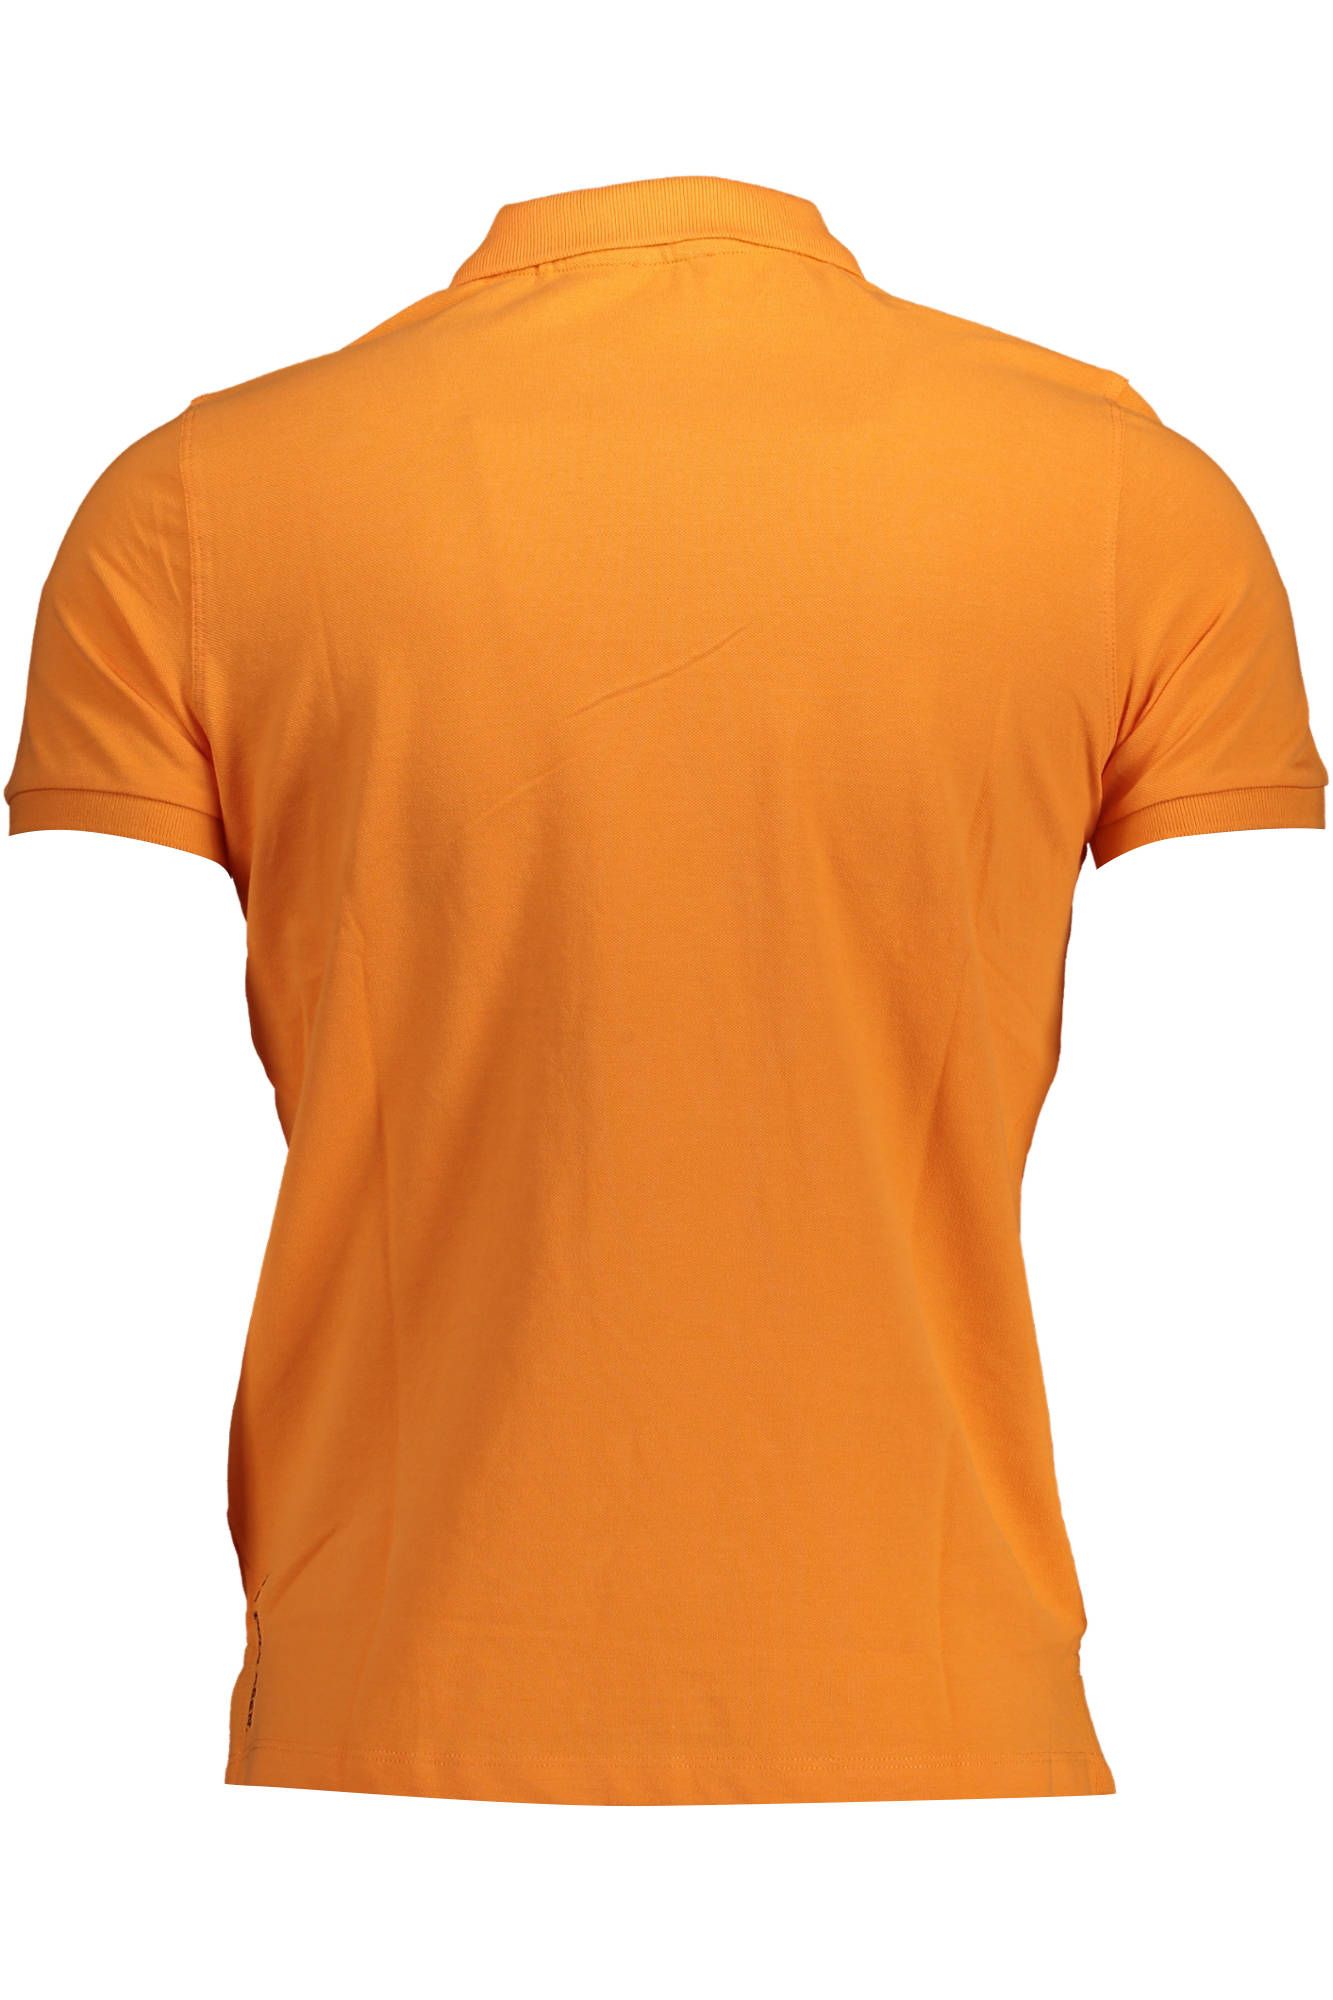 Orange Embroidered Cotton Polo Shirt